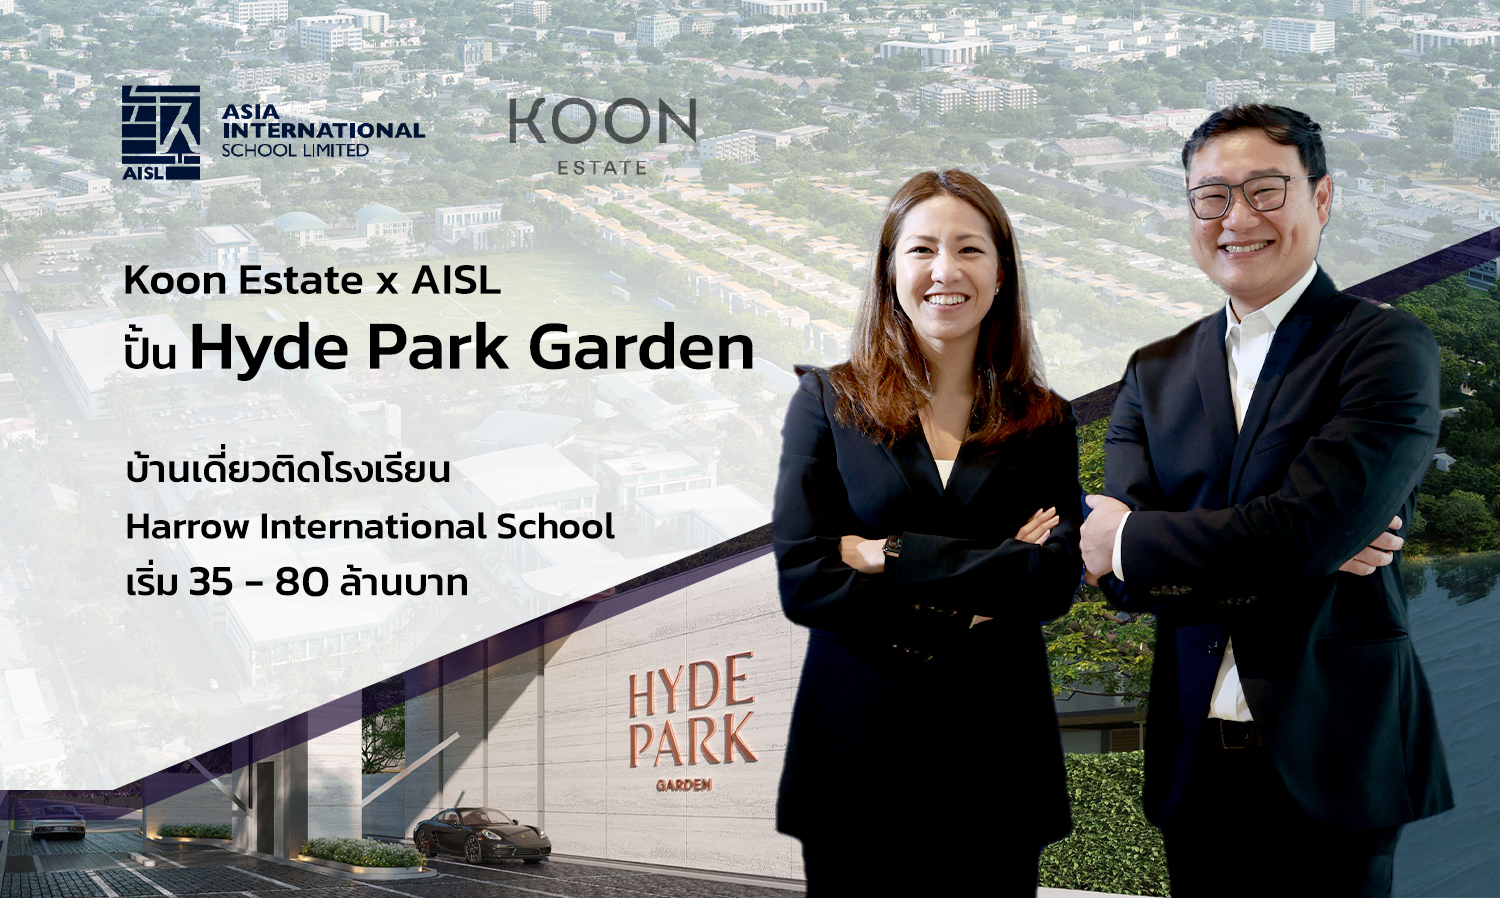 koon-estate-x-aisl-ปั้น-hyde-park-garden-บ้านเดี่ยวติดโรงเ